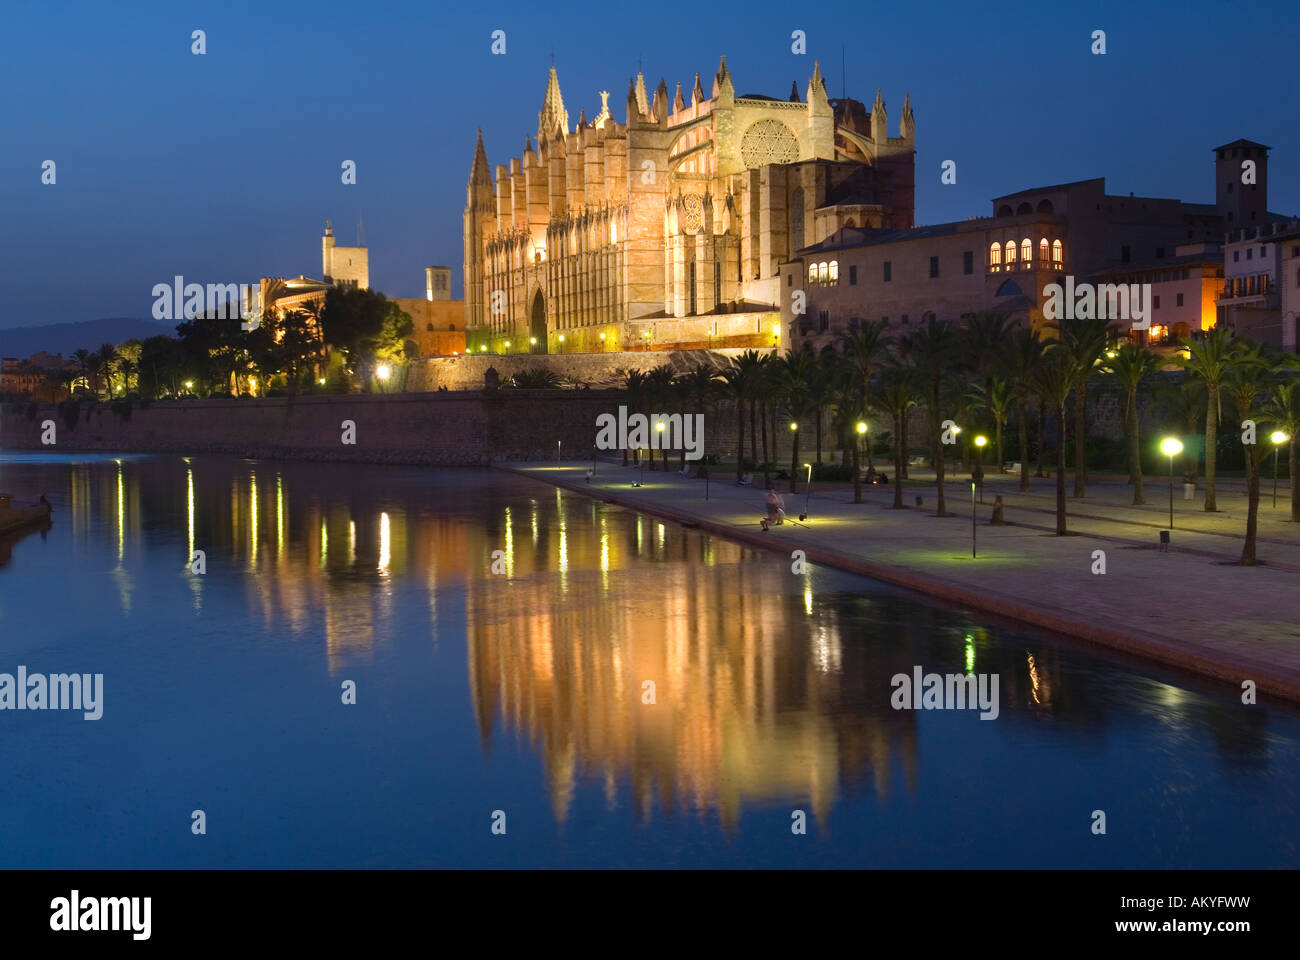 The Cathedral at night, Palma, Mallorca, Balearics, Mediterranean, Spain, Europe Stock Photo